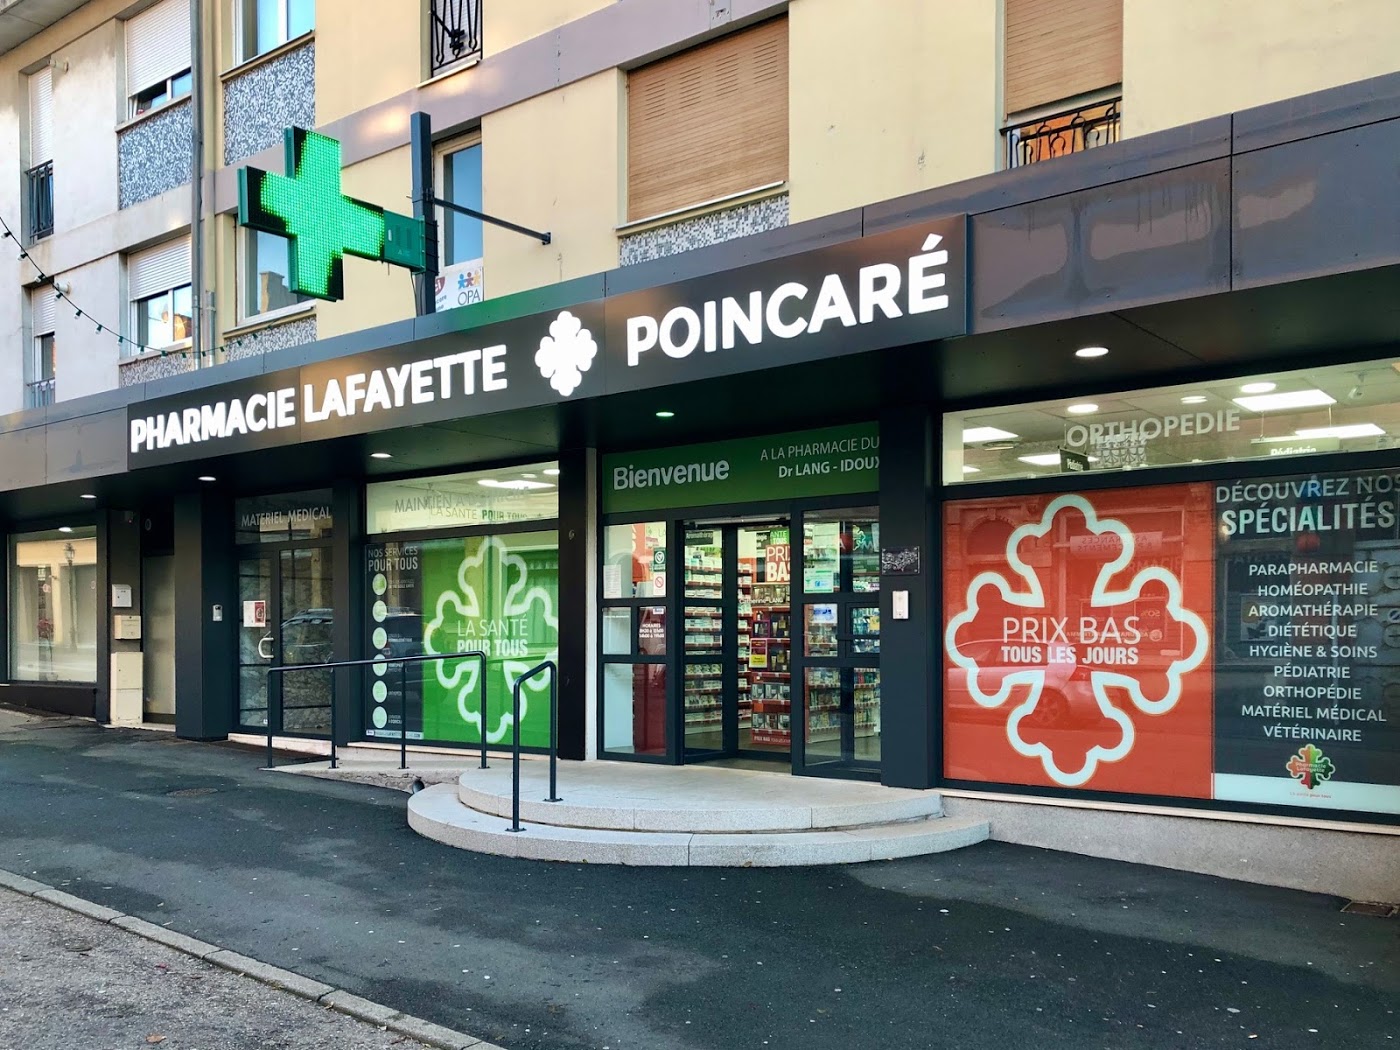 Pharmacie Lafayette Poincaré